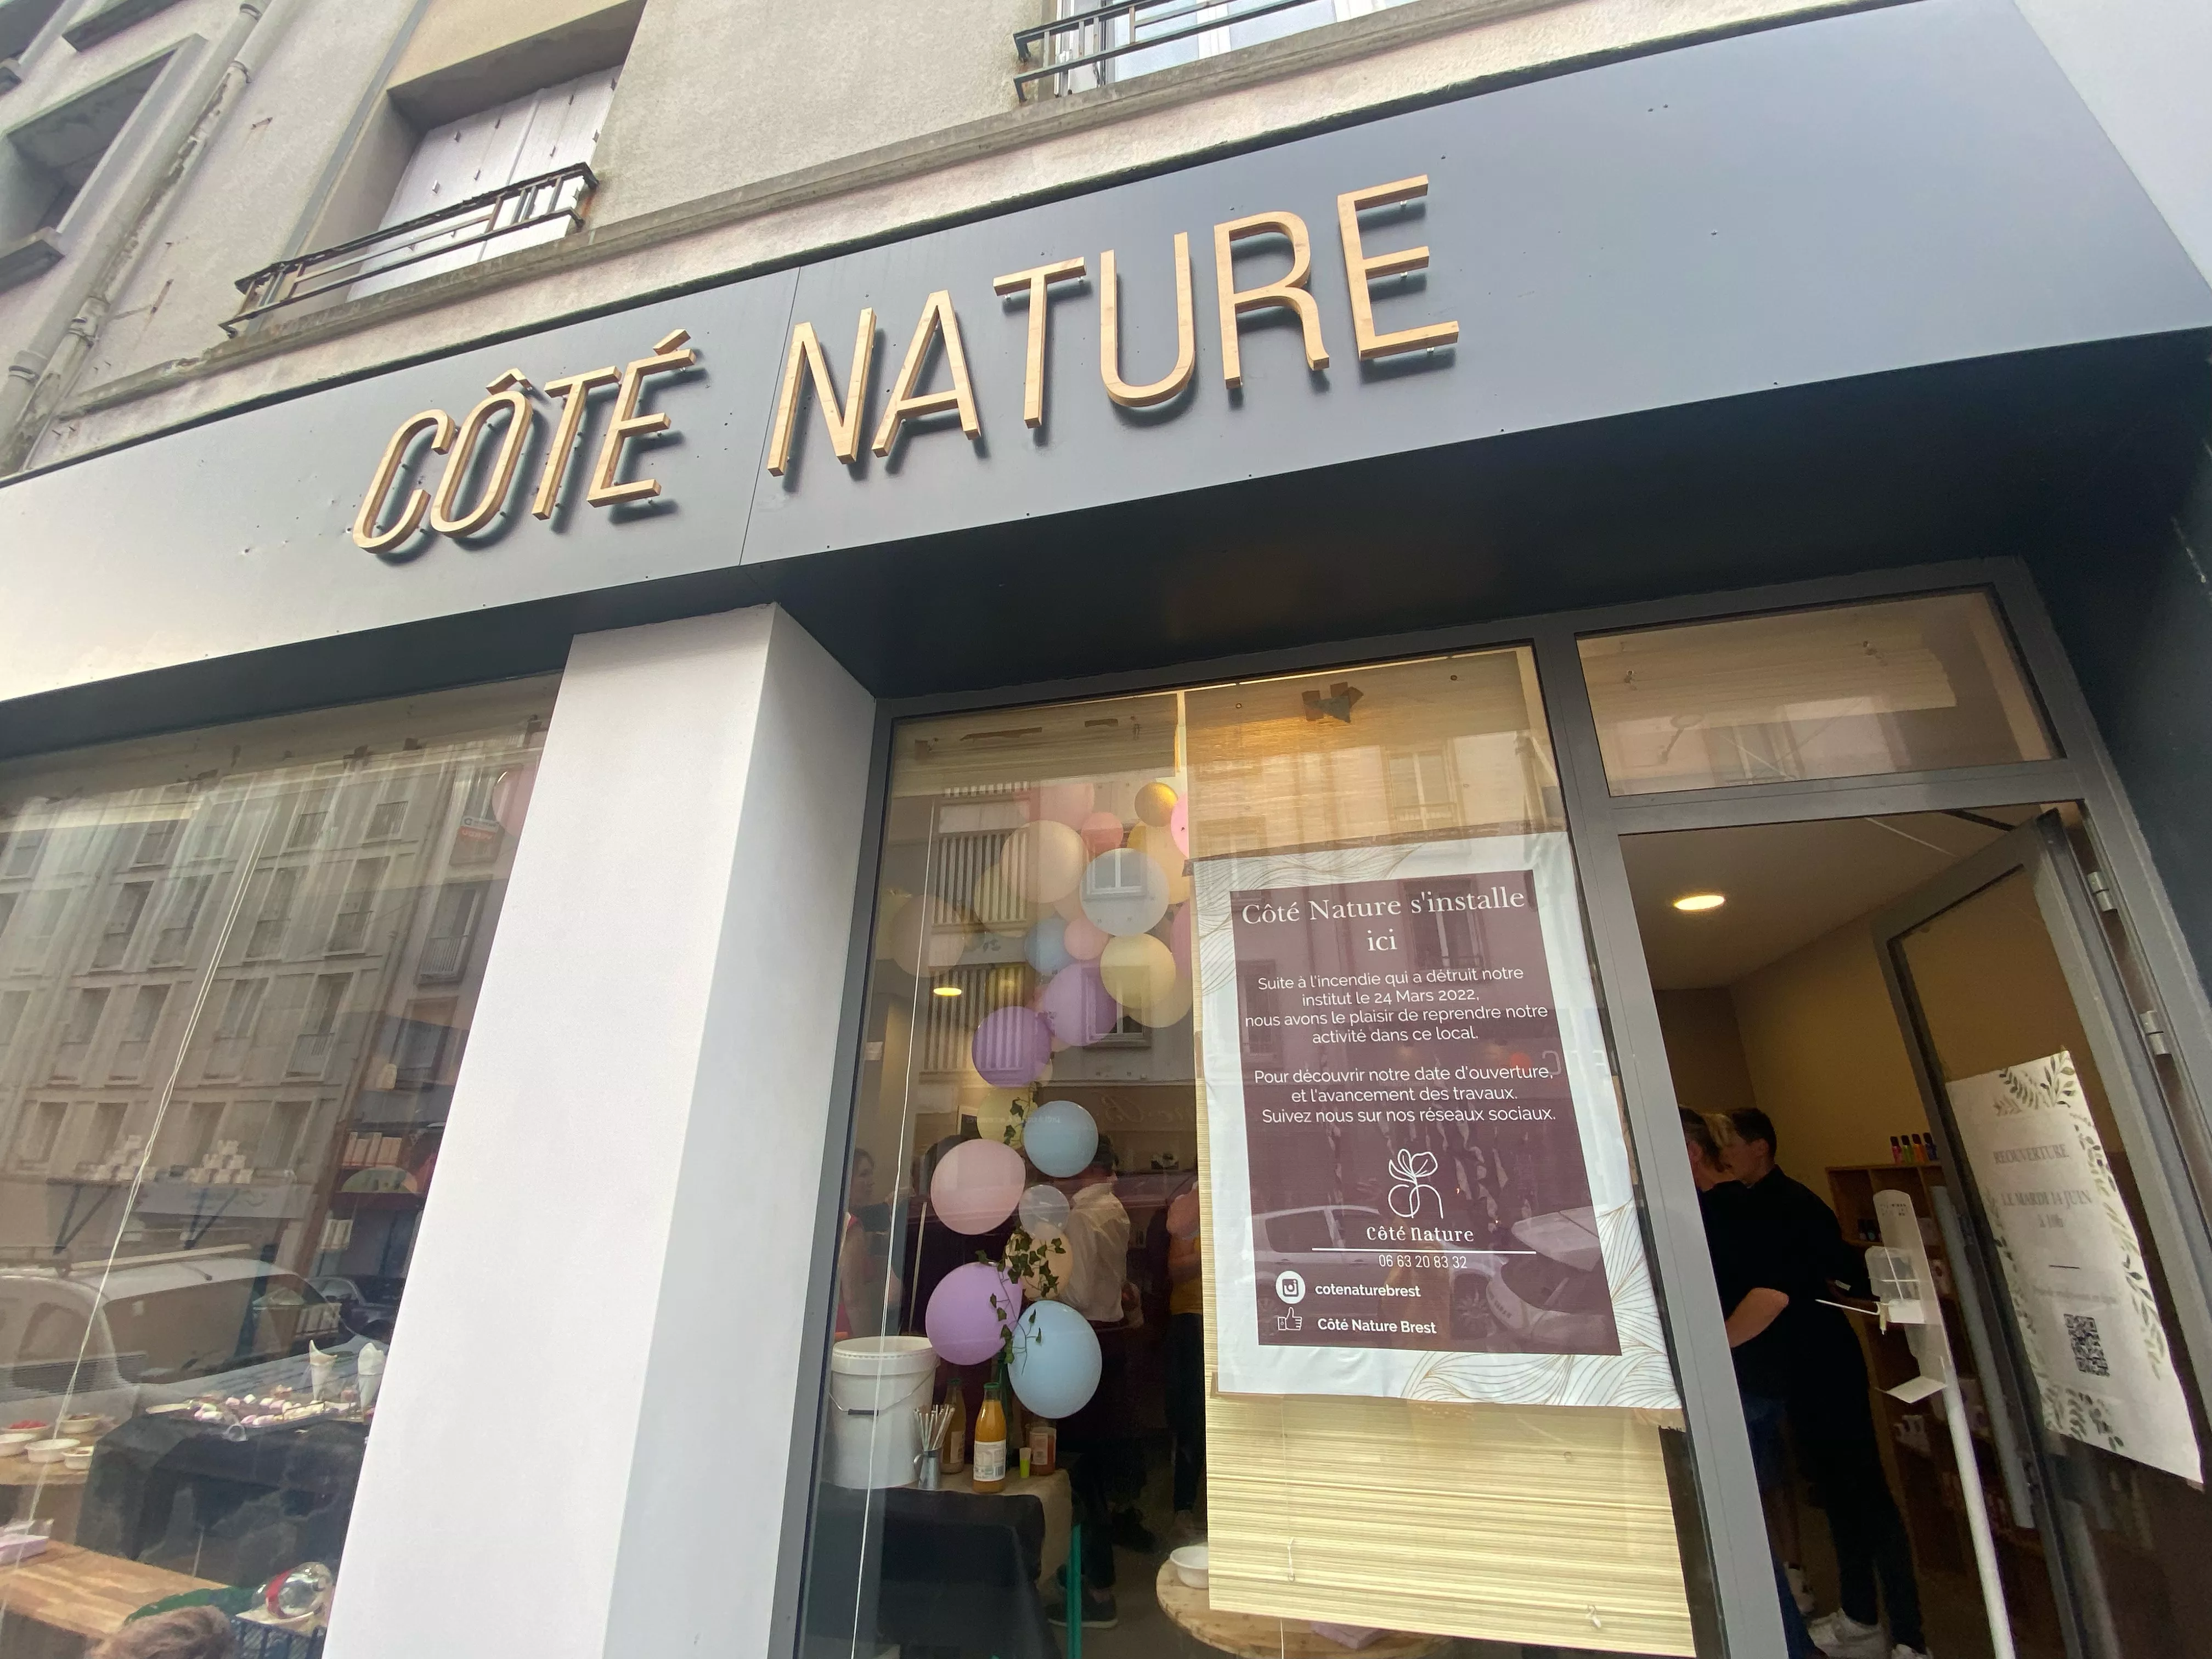 Façade de l'institut Côté Nature à Brest, rue Jean Macé